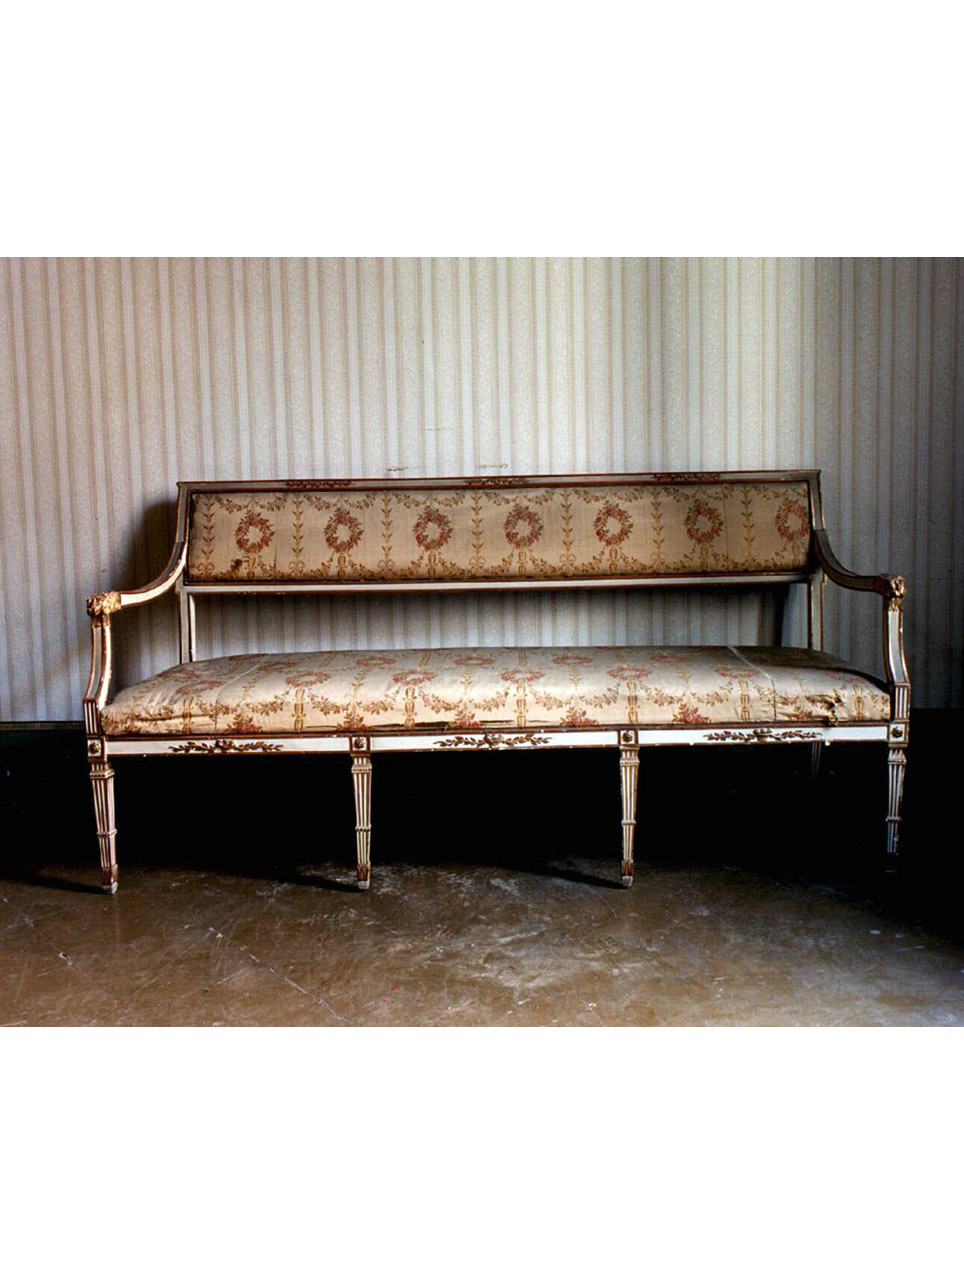 motivi decorativi floreali (divano) - bottega napoletana, manifattura di San Leucio (ultimo quarto sec. XIX)